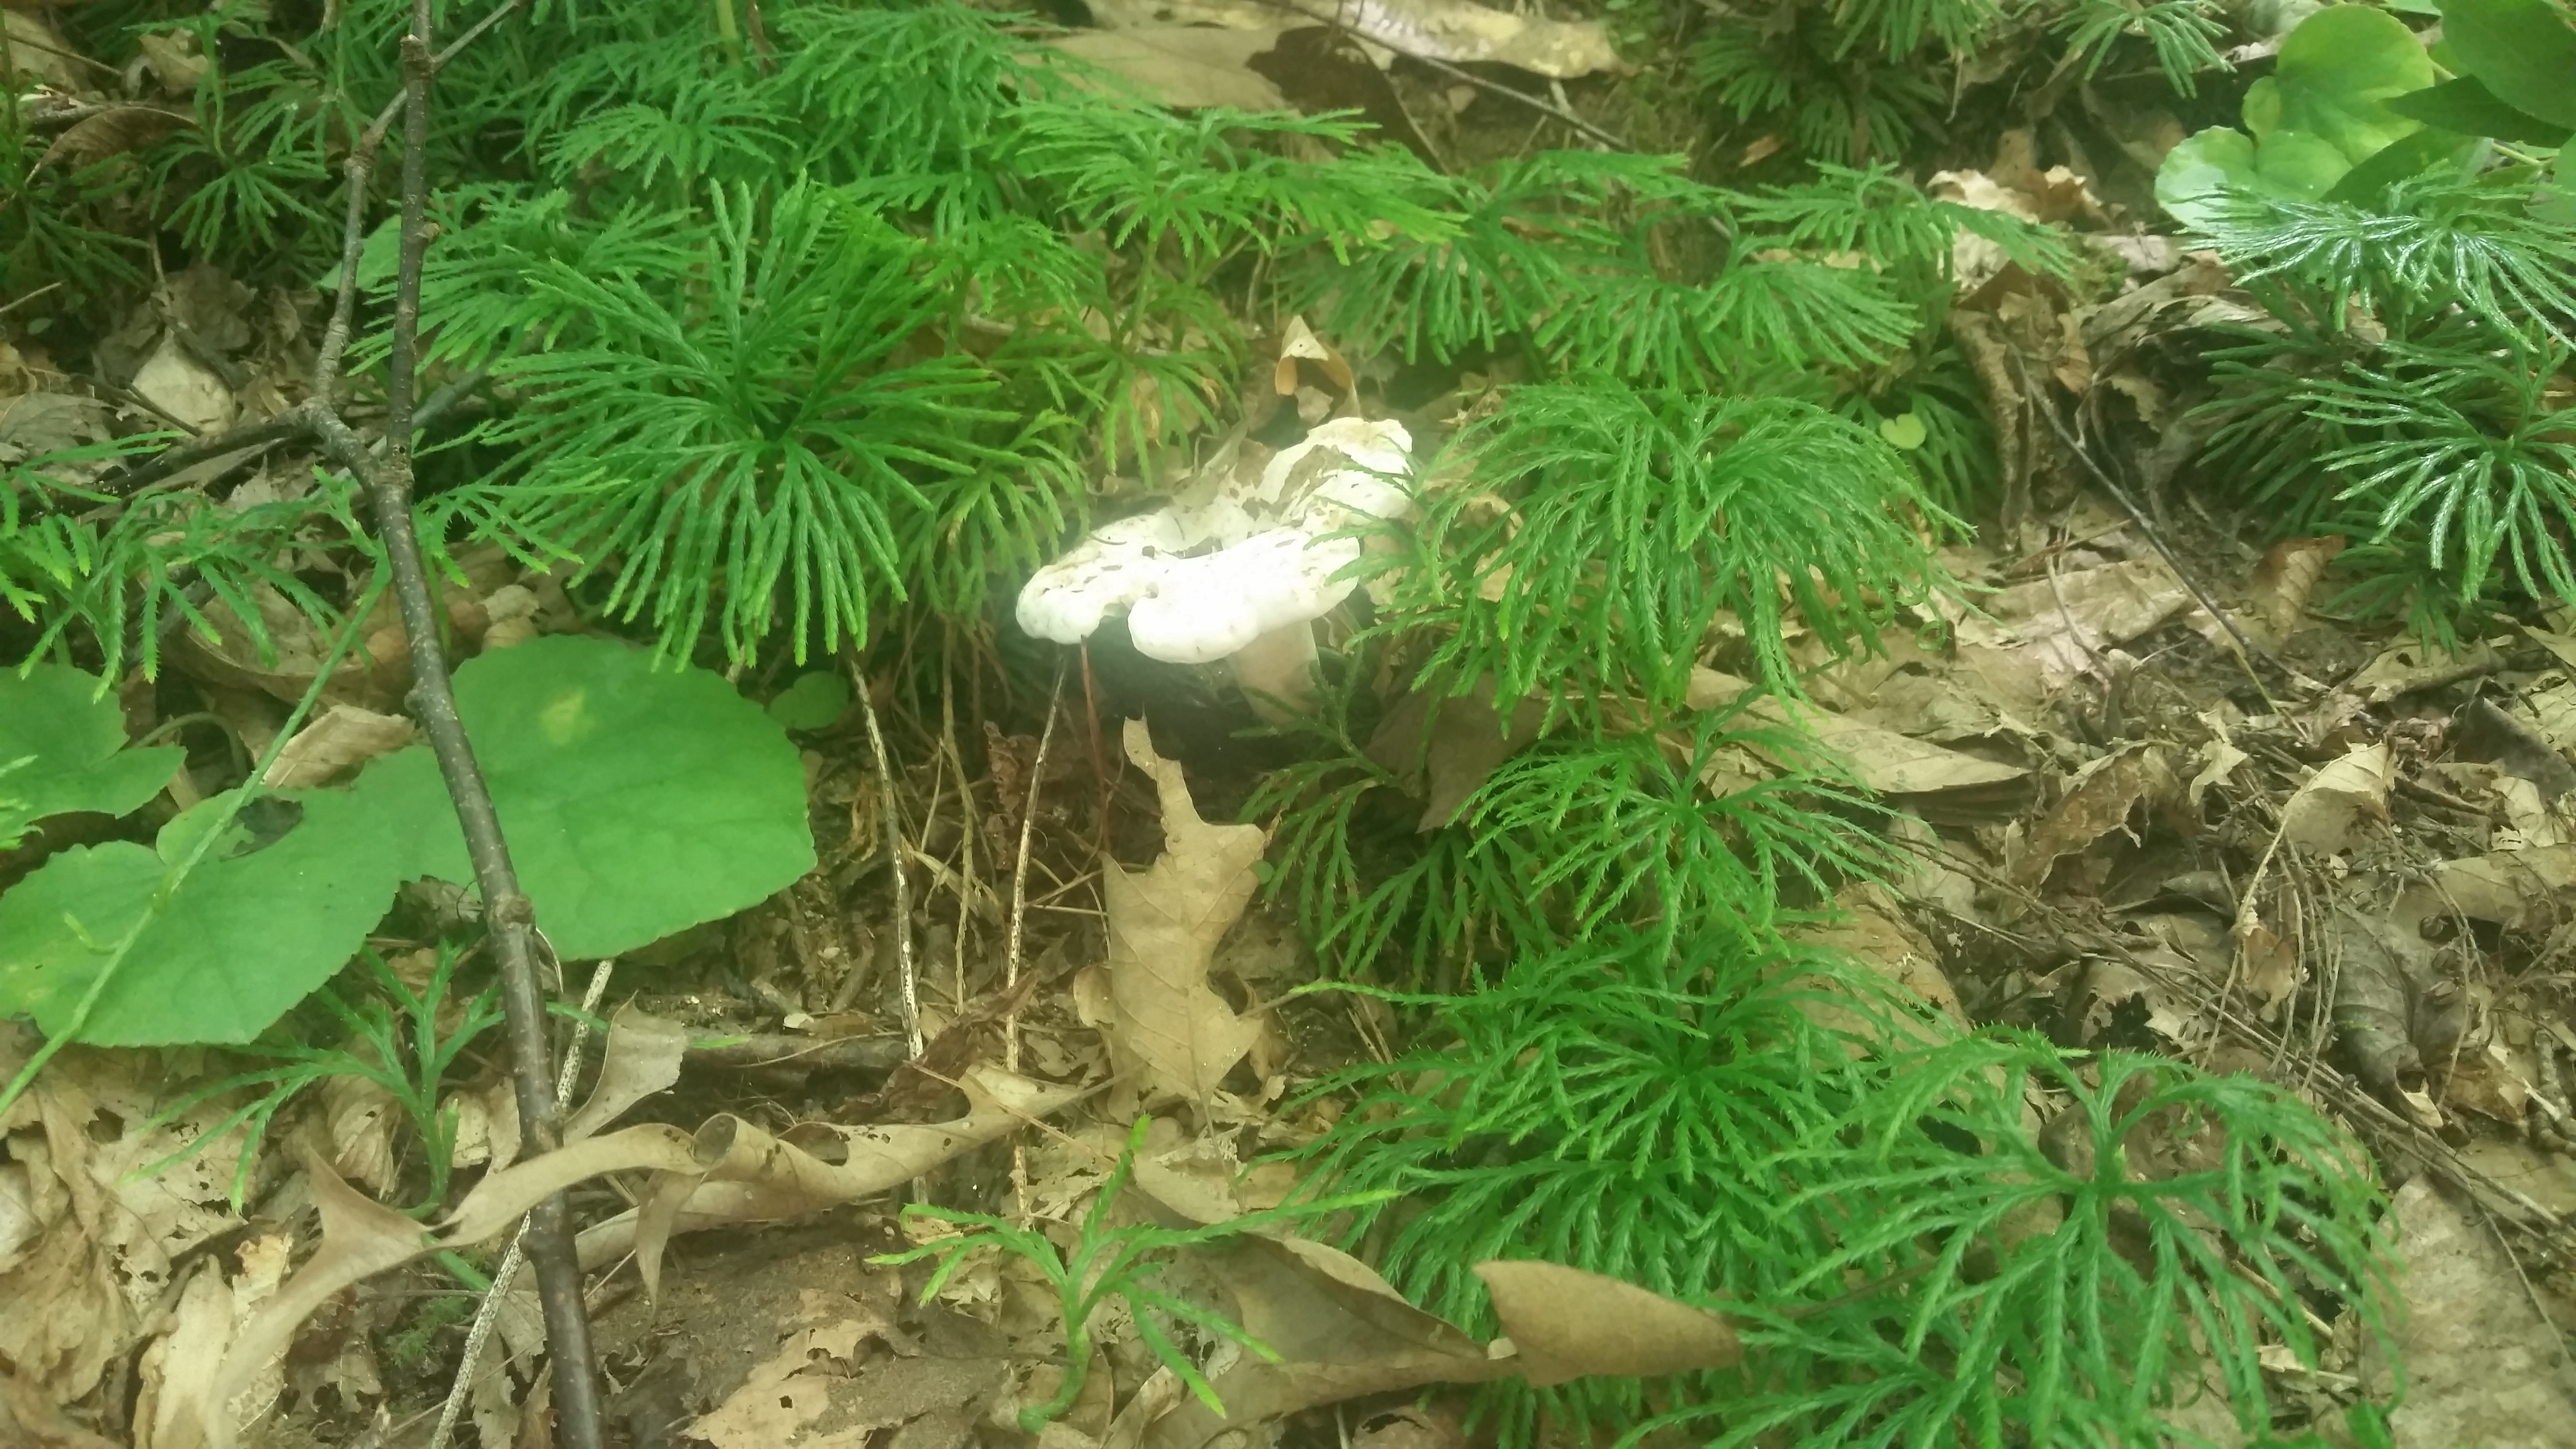 club moss and mushroom